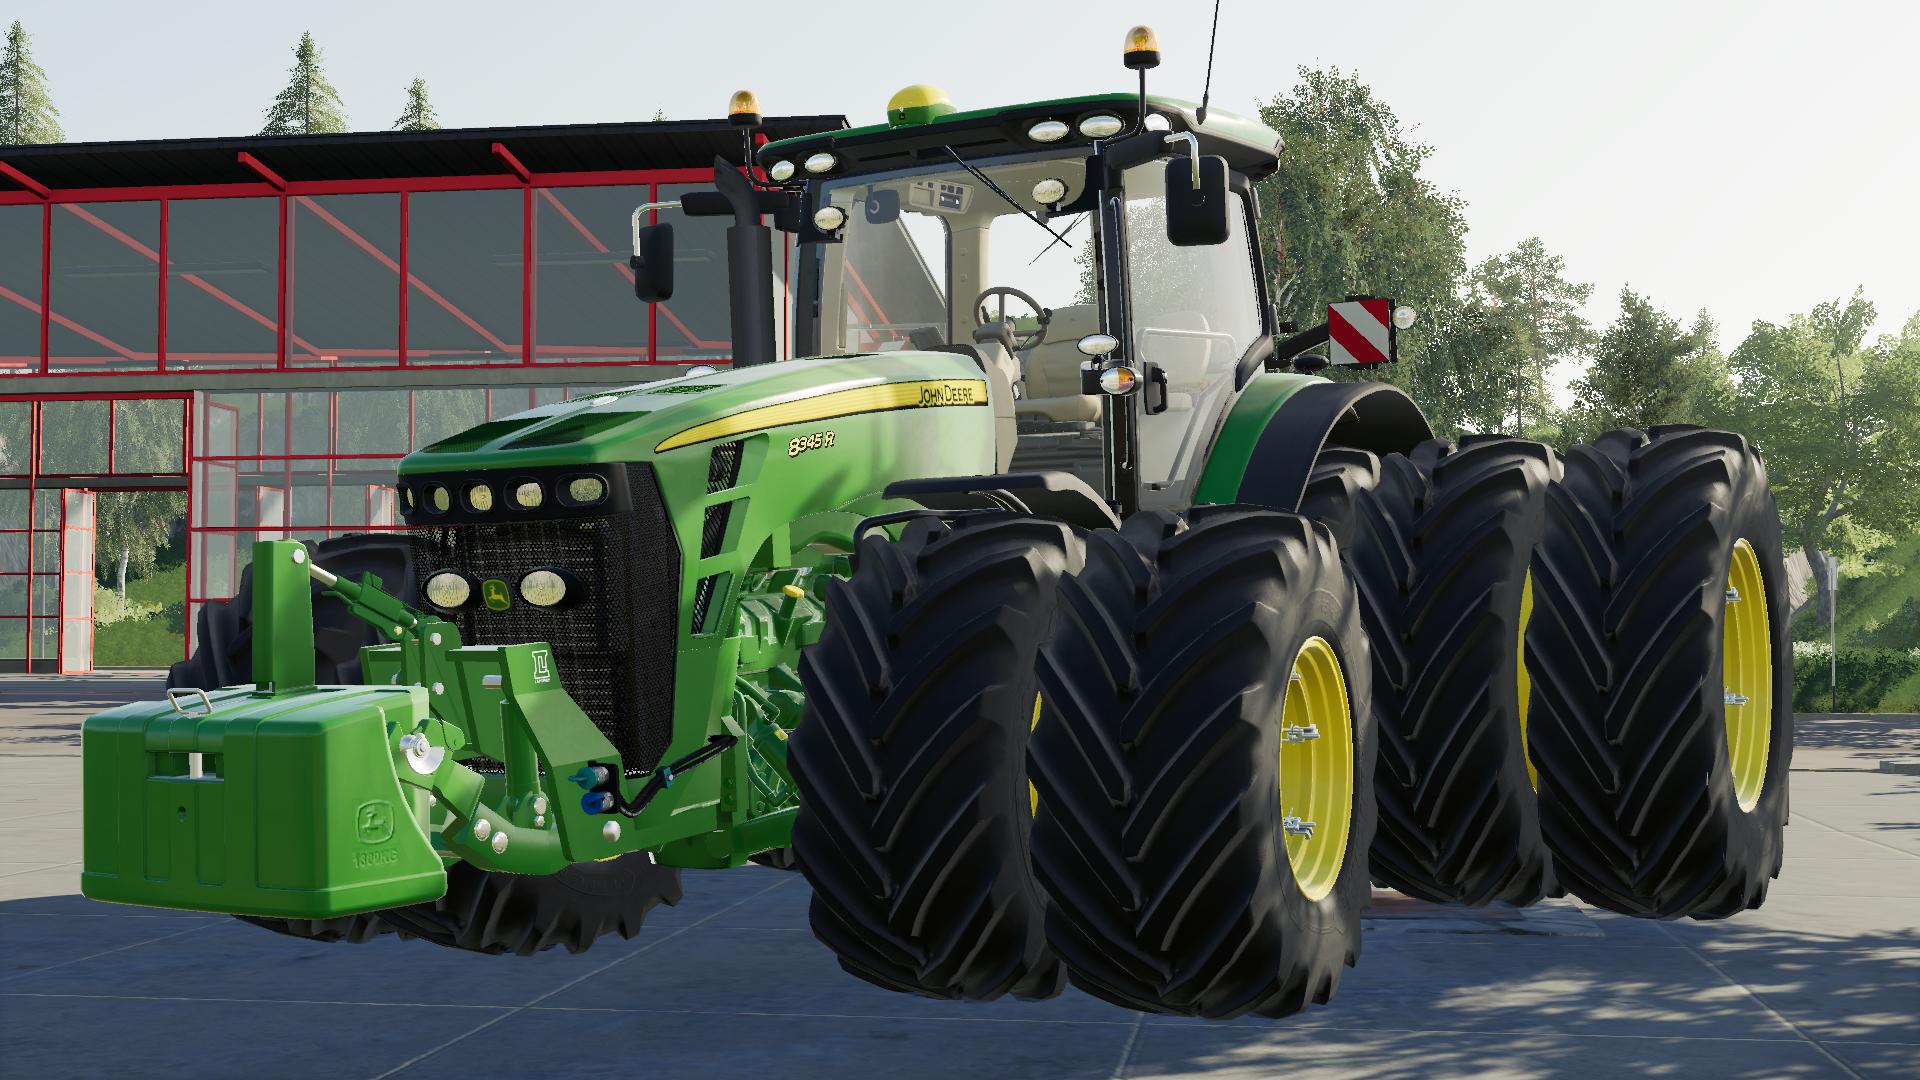 FS19 - John Deere 8R 2009 Tractor V1.0 | Farming Simulator 19 | Mods.club